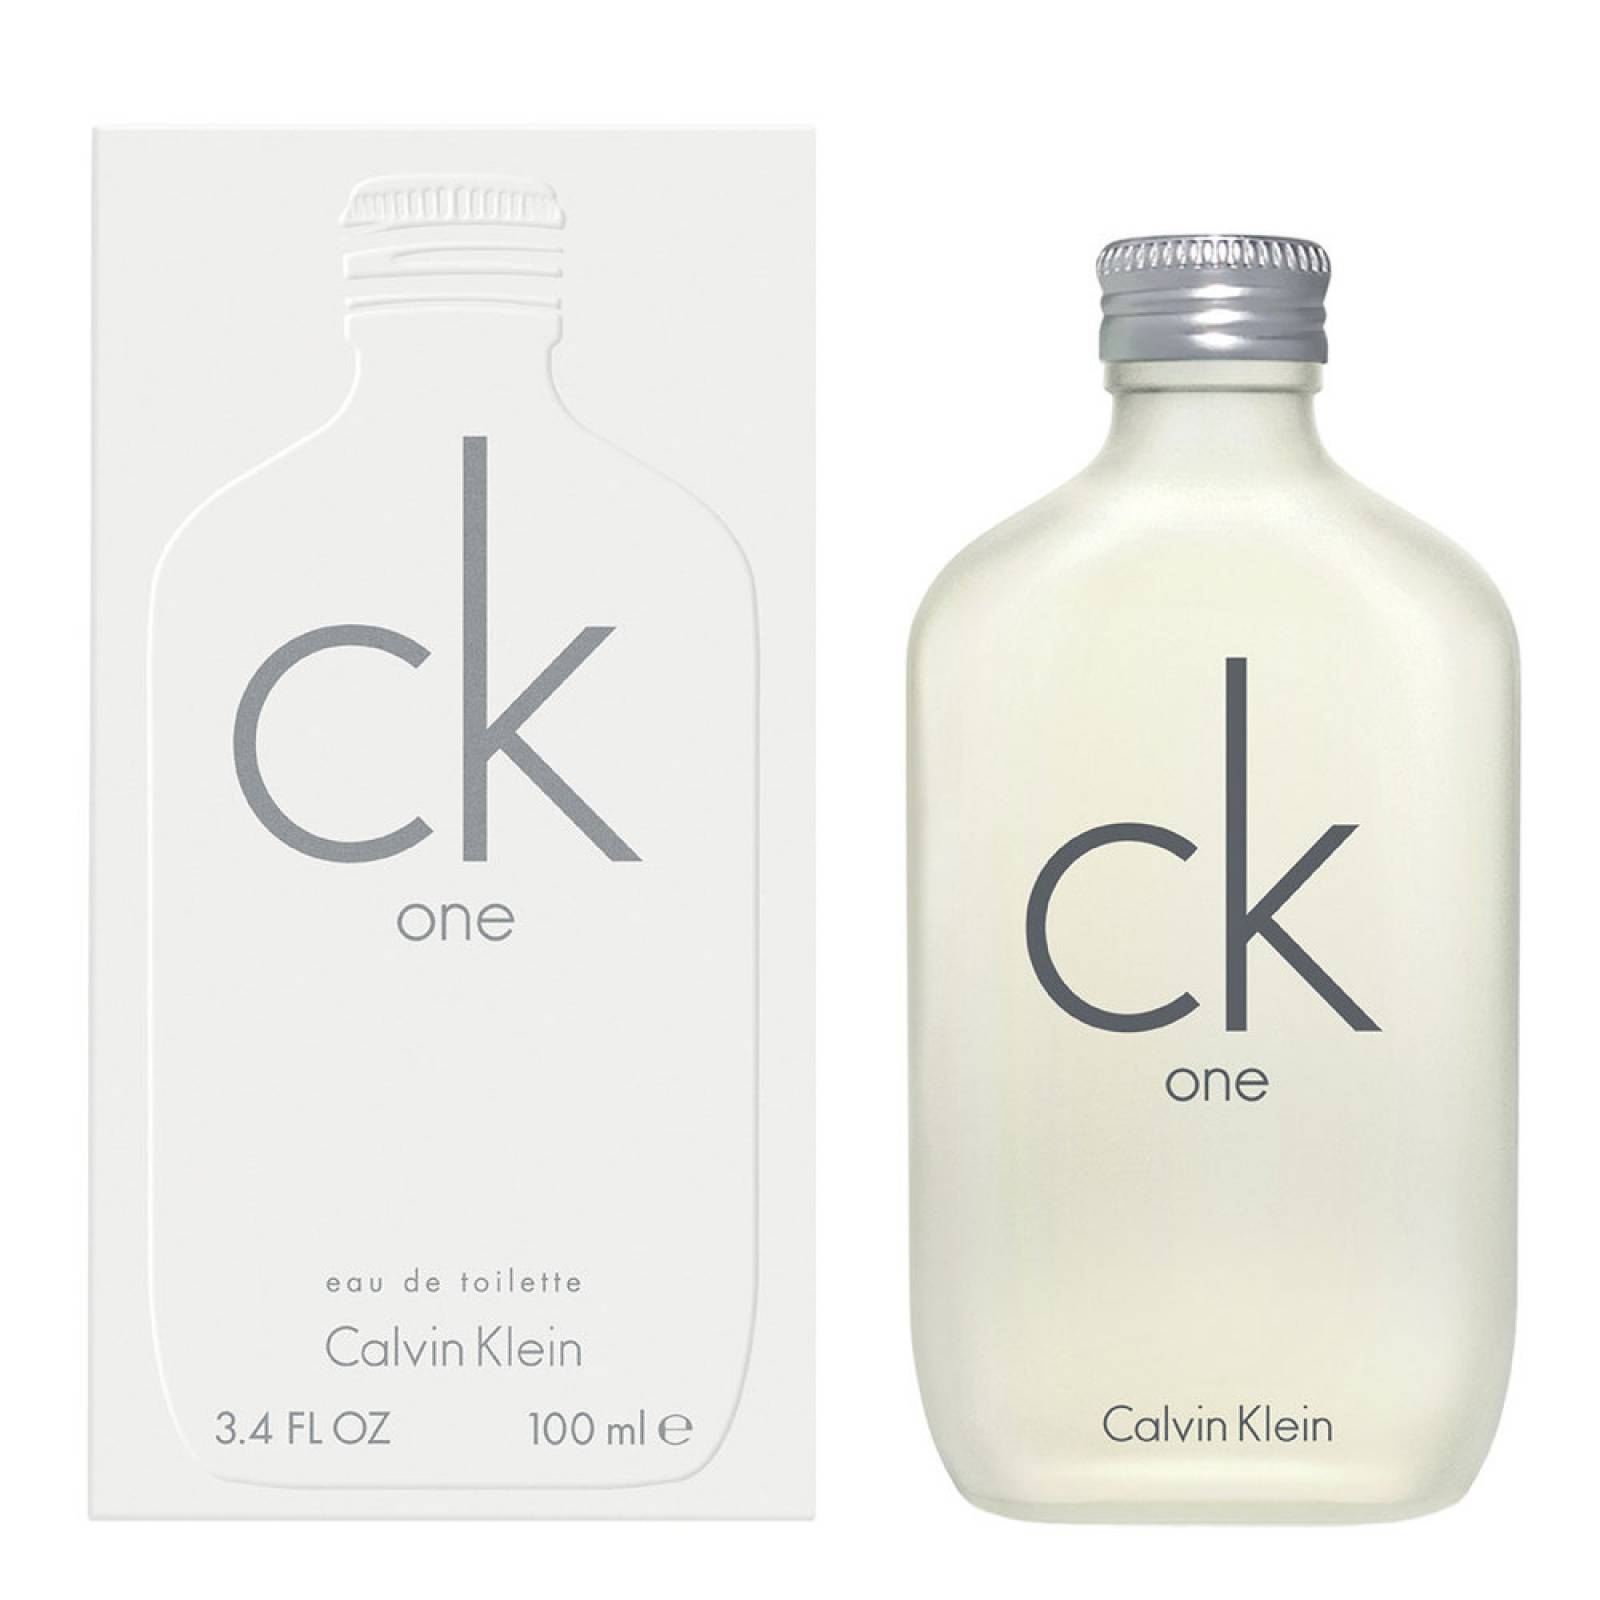 CK ONE De Calvin Klein Eau De Toilette 100 ml